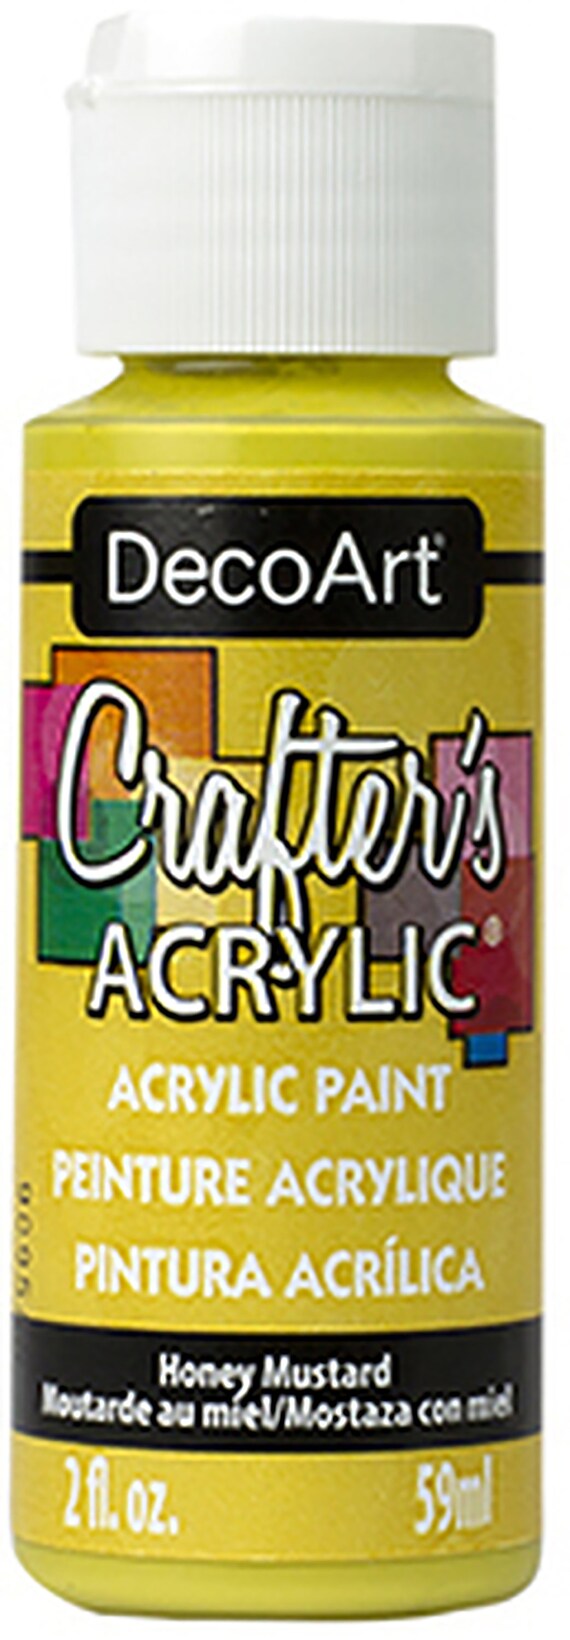 Craft Acrylic Paint, Iridescent, 2oz Bottles - Set of 10